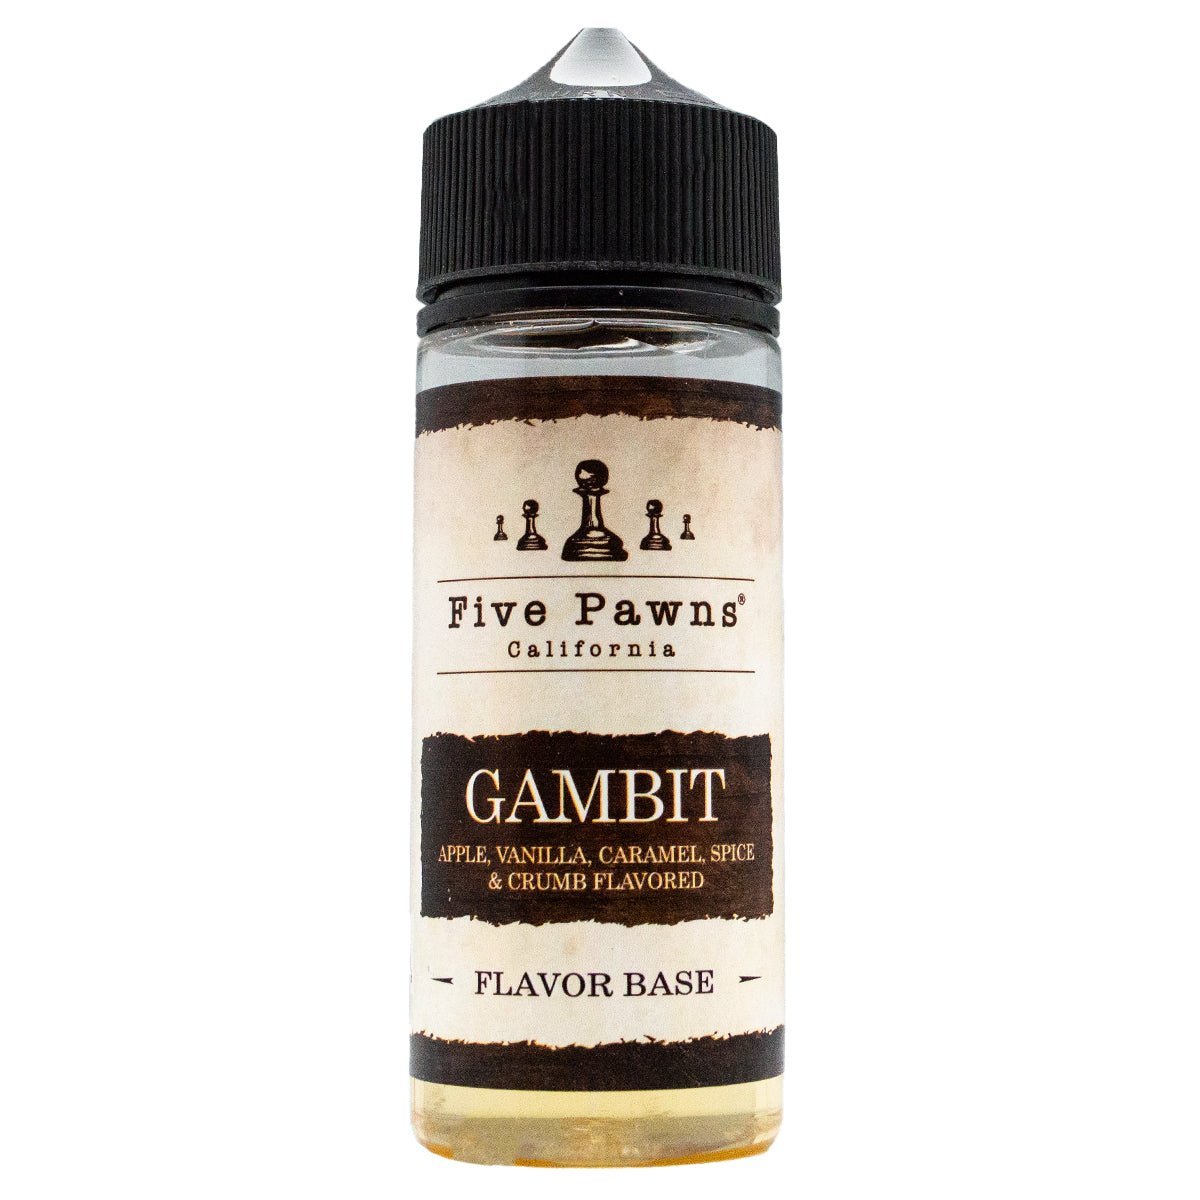 Gambit 100ml Shortfill By Five Pawns - Manabush Eliquid - Tobacco E-liquid and Vape Juice